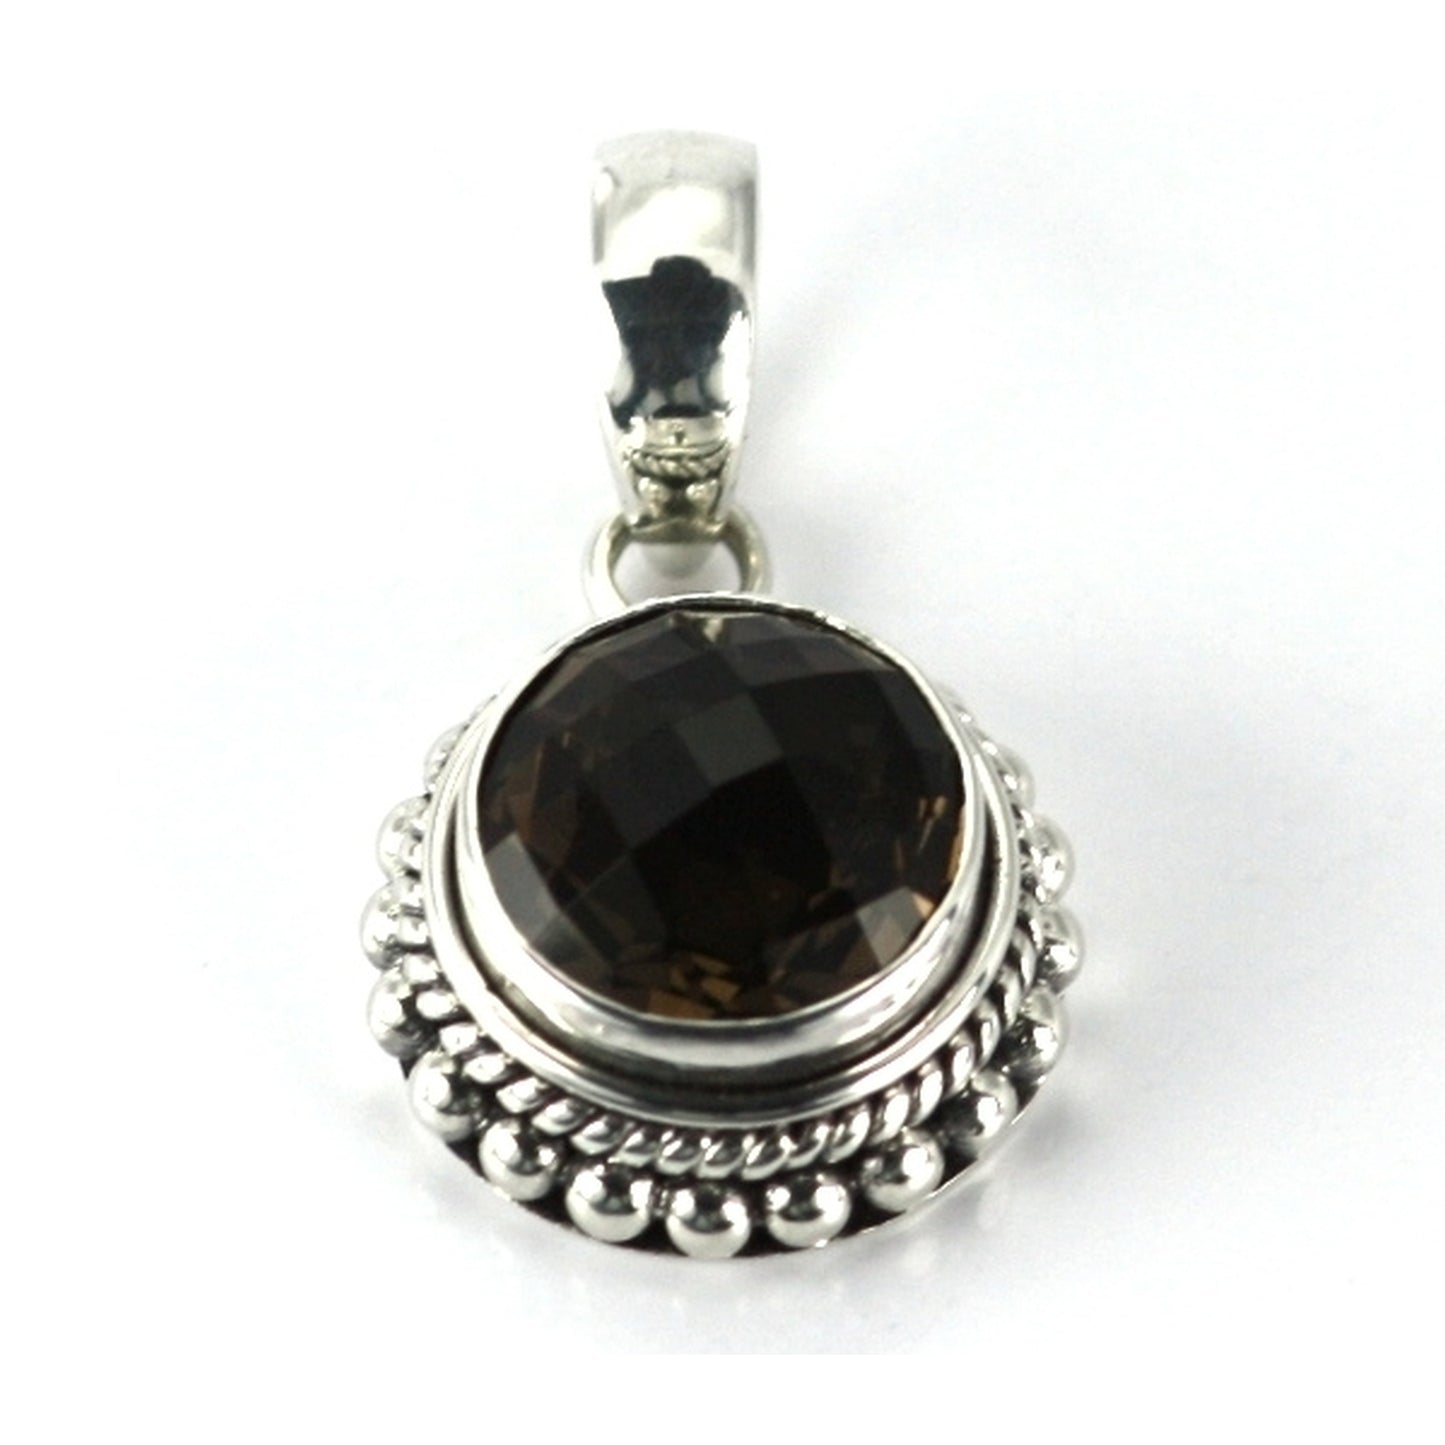 Silver pendant with round smoky topaz gemstone.